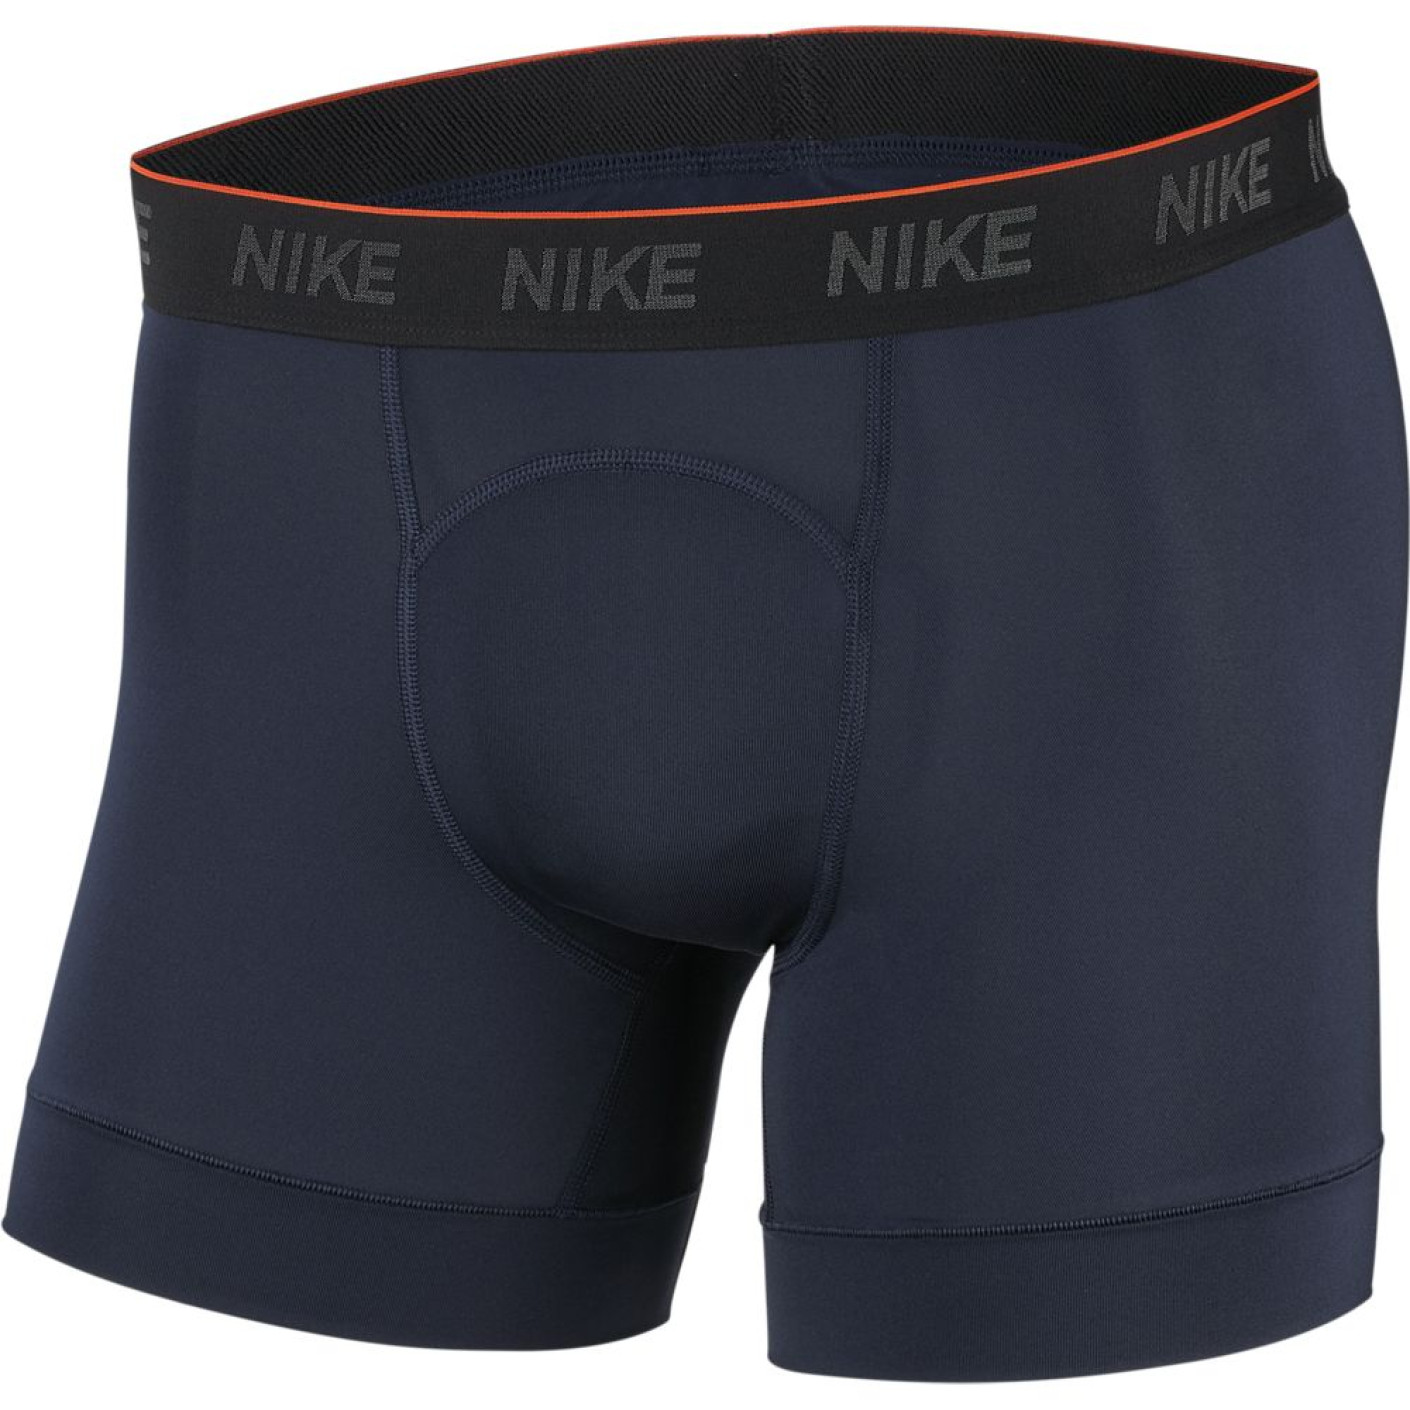 Nike Boxershort Donkerblauw